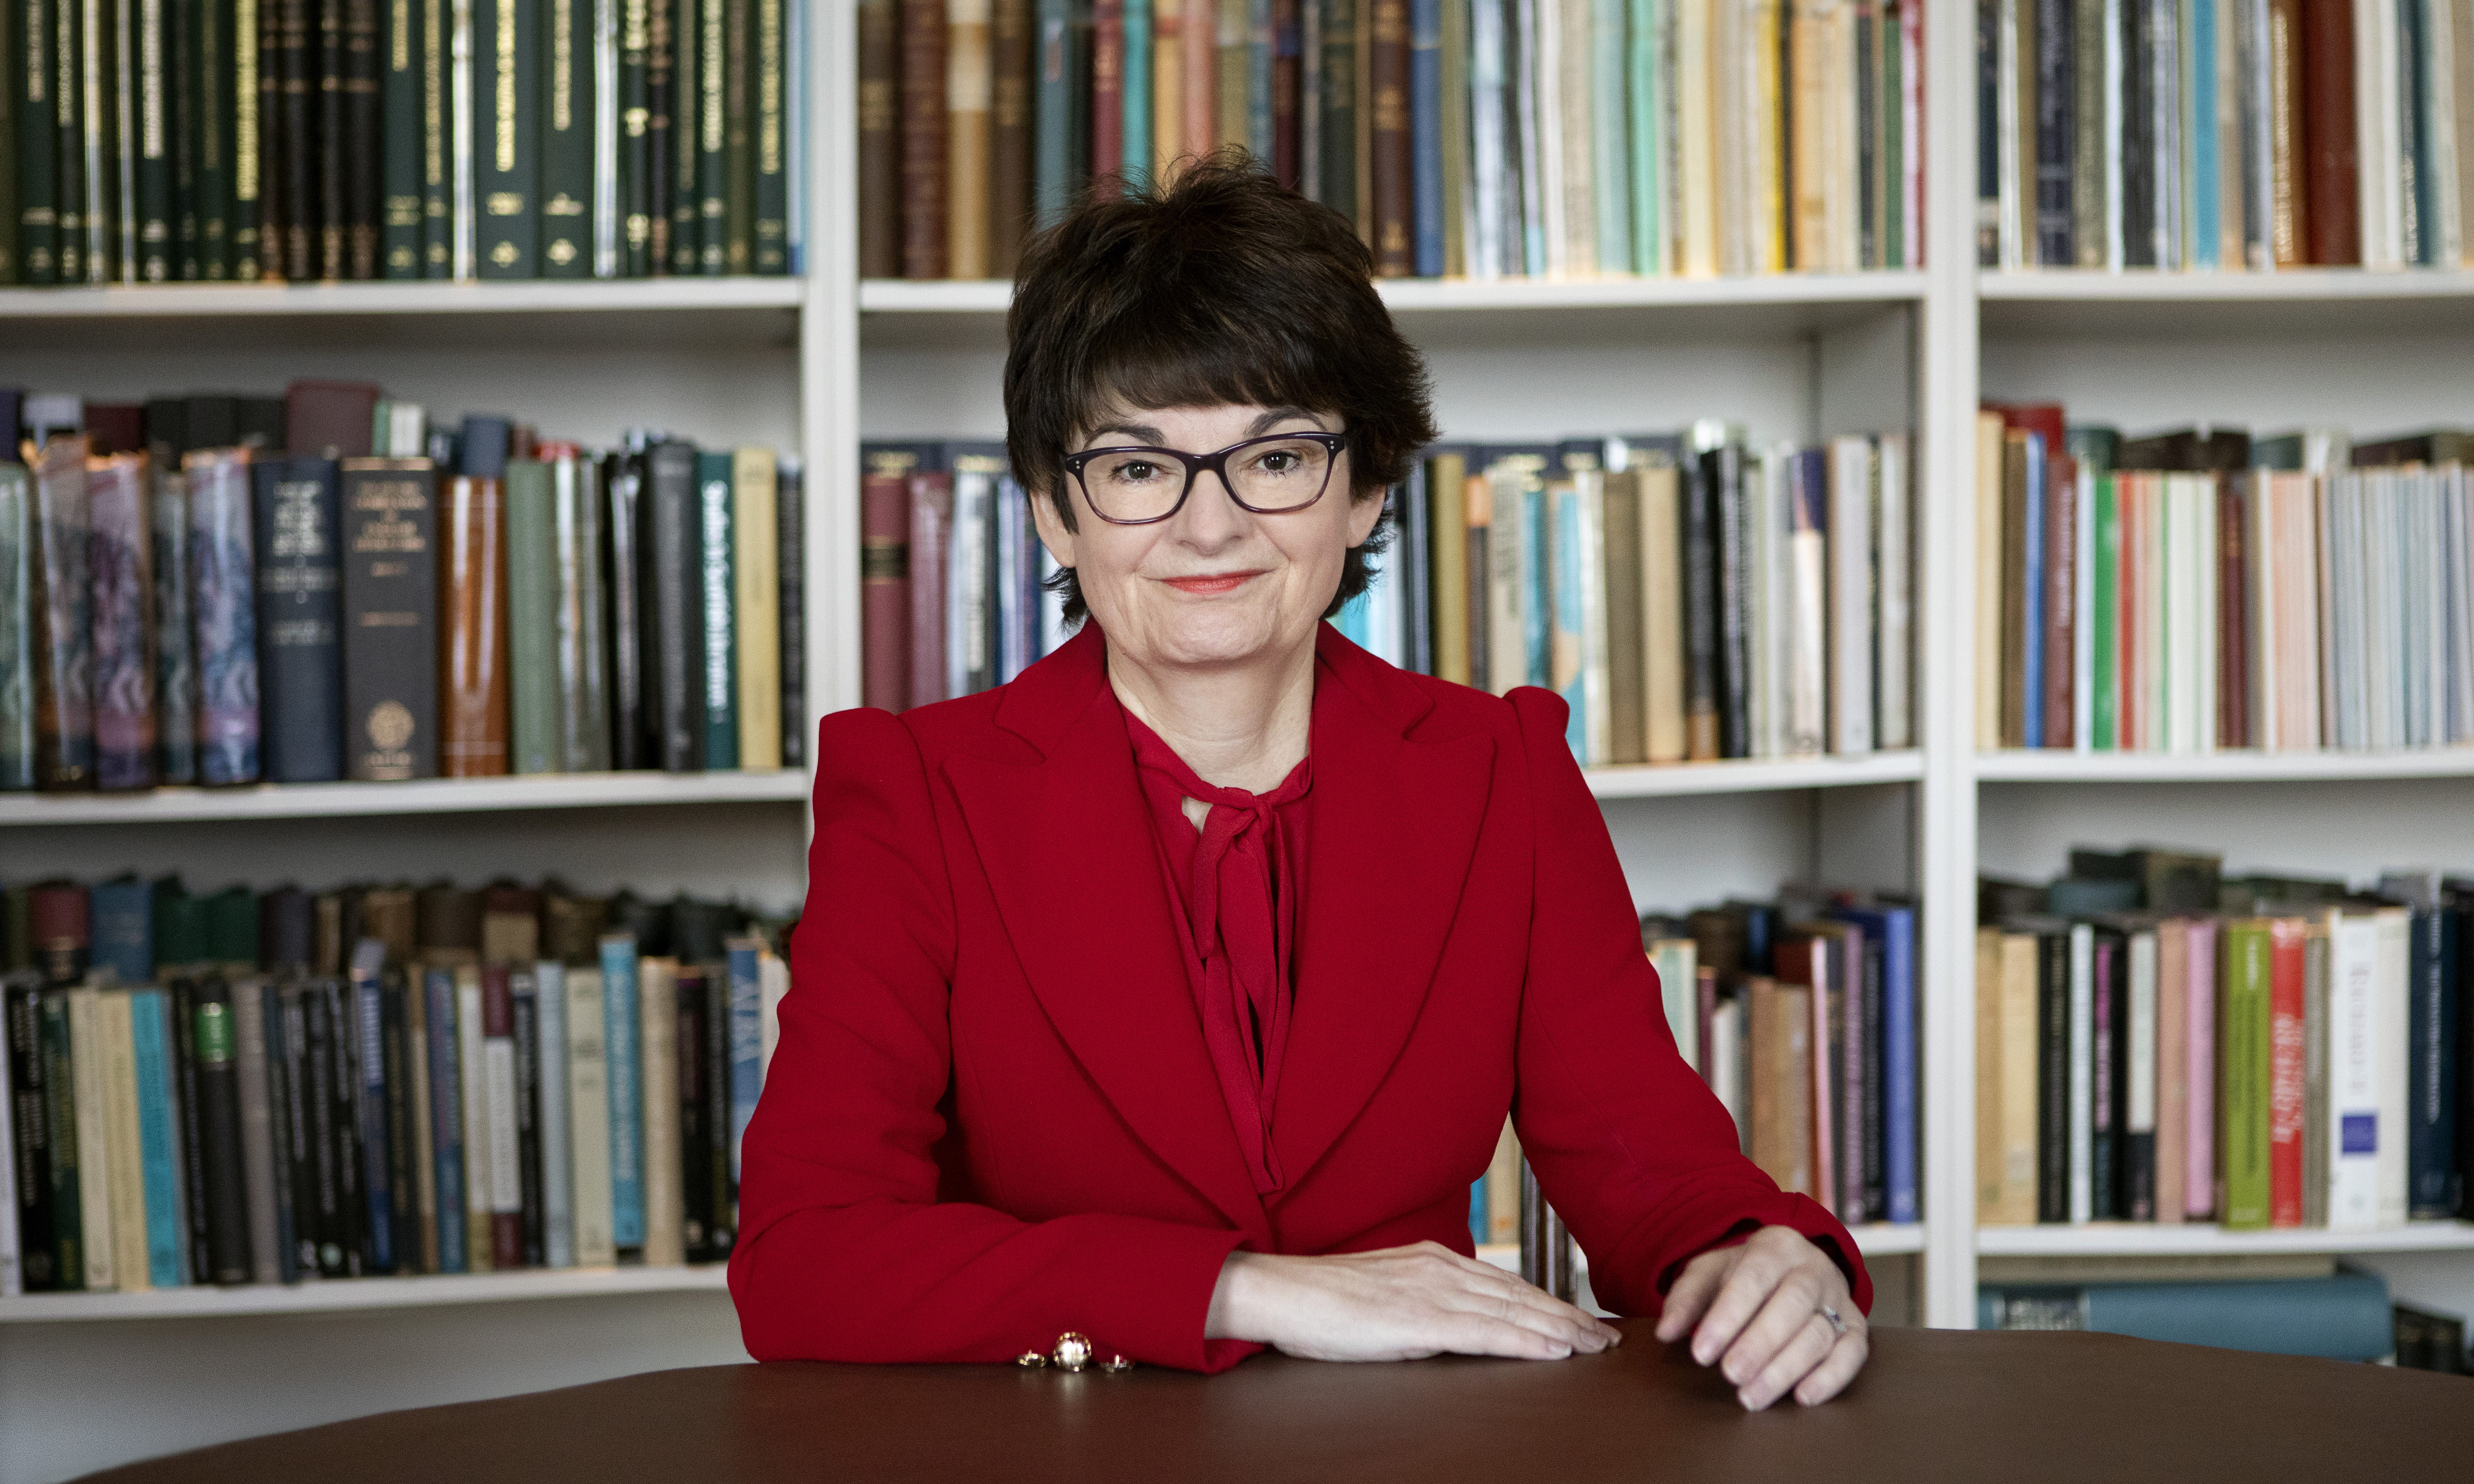 Professor Sally Mapstone, the Principal of the University of St Andrews.